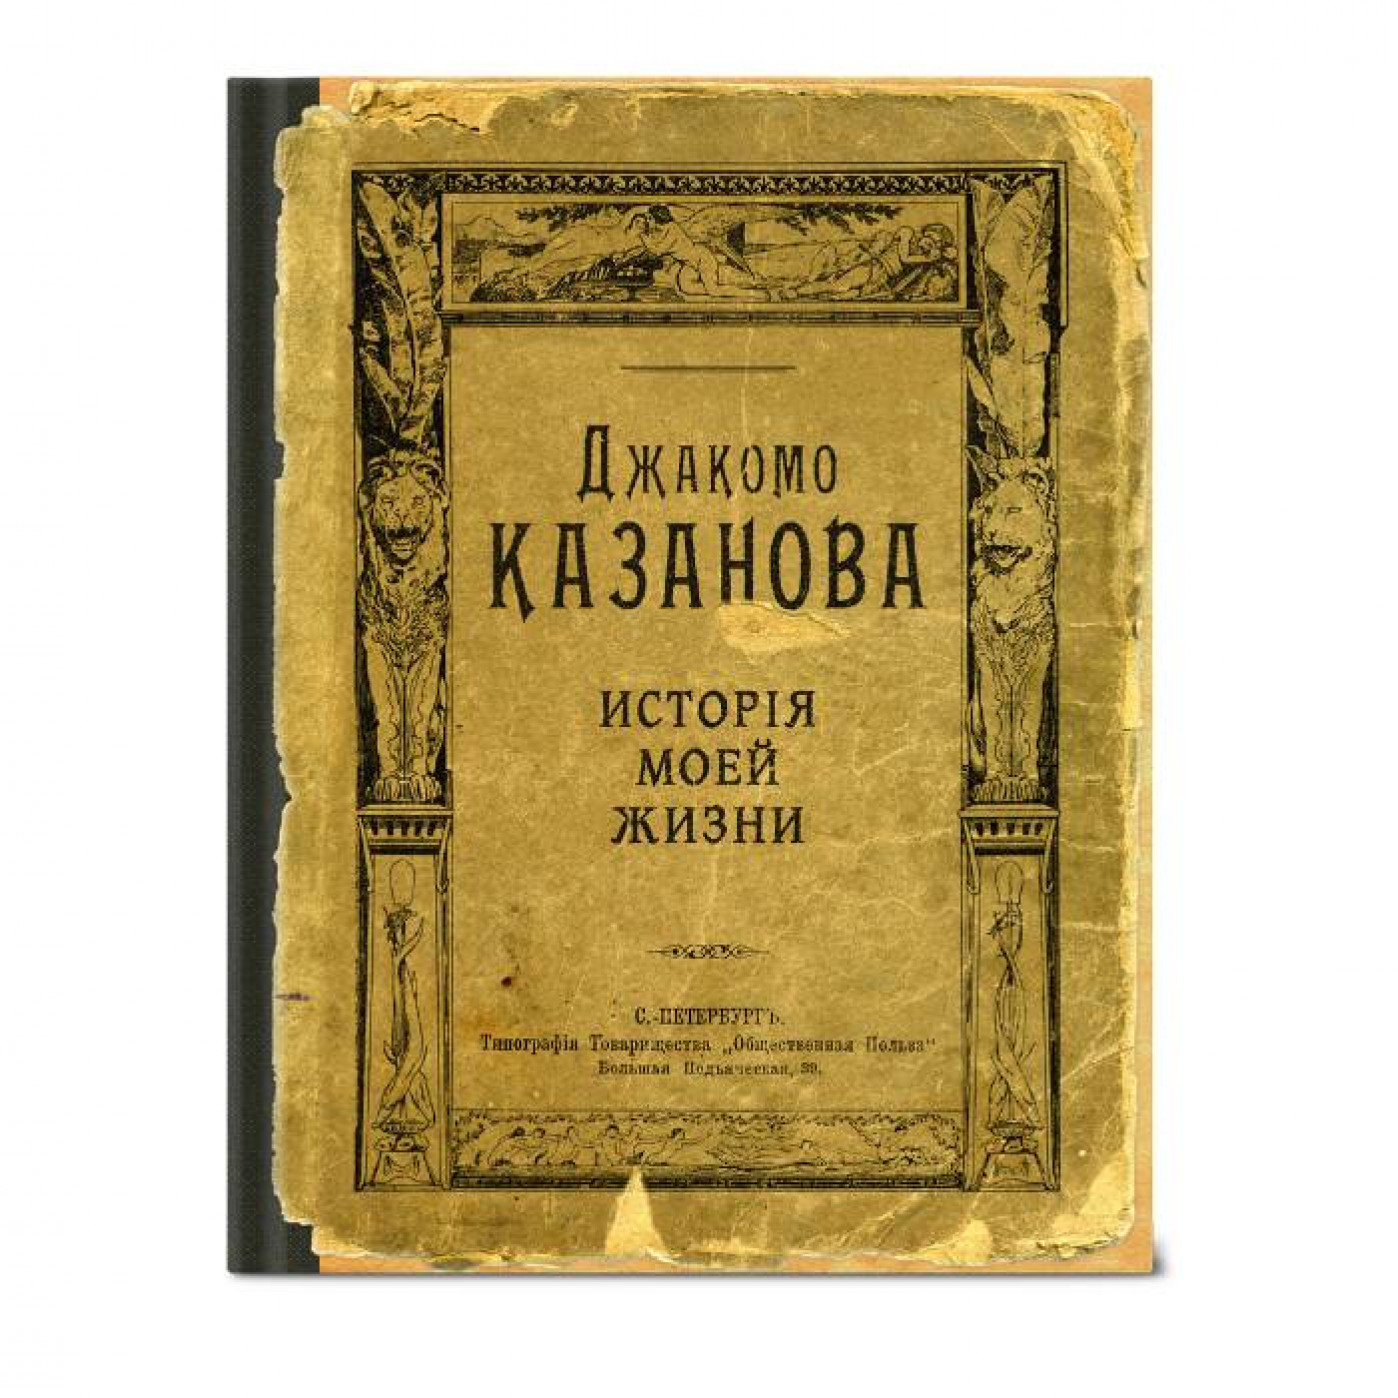 Записная книжка Казанова